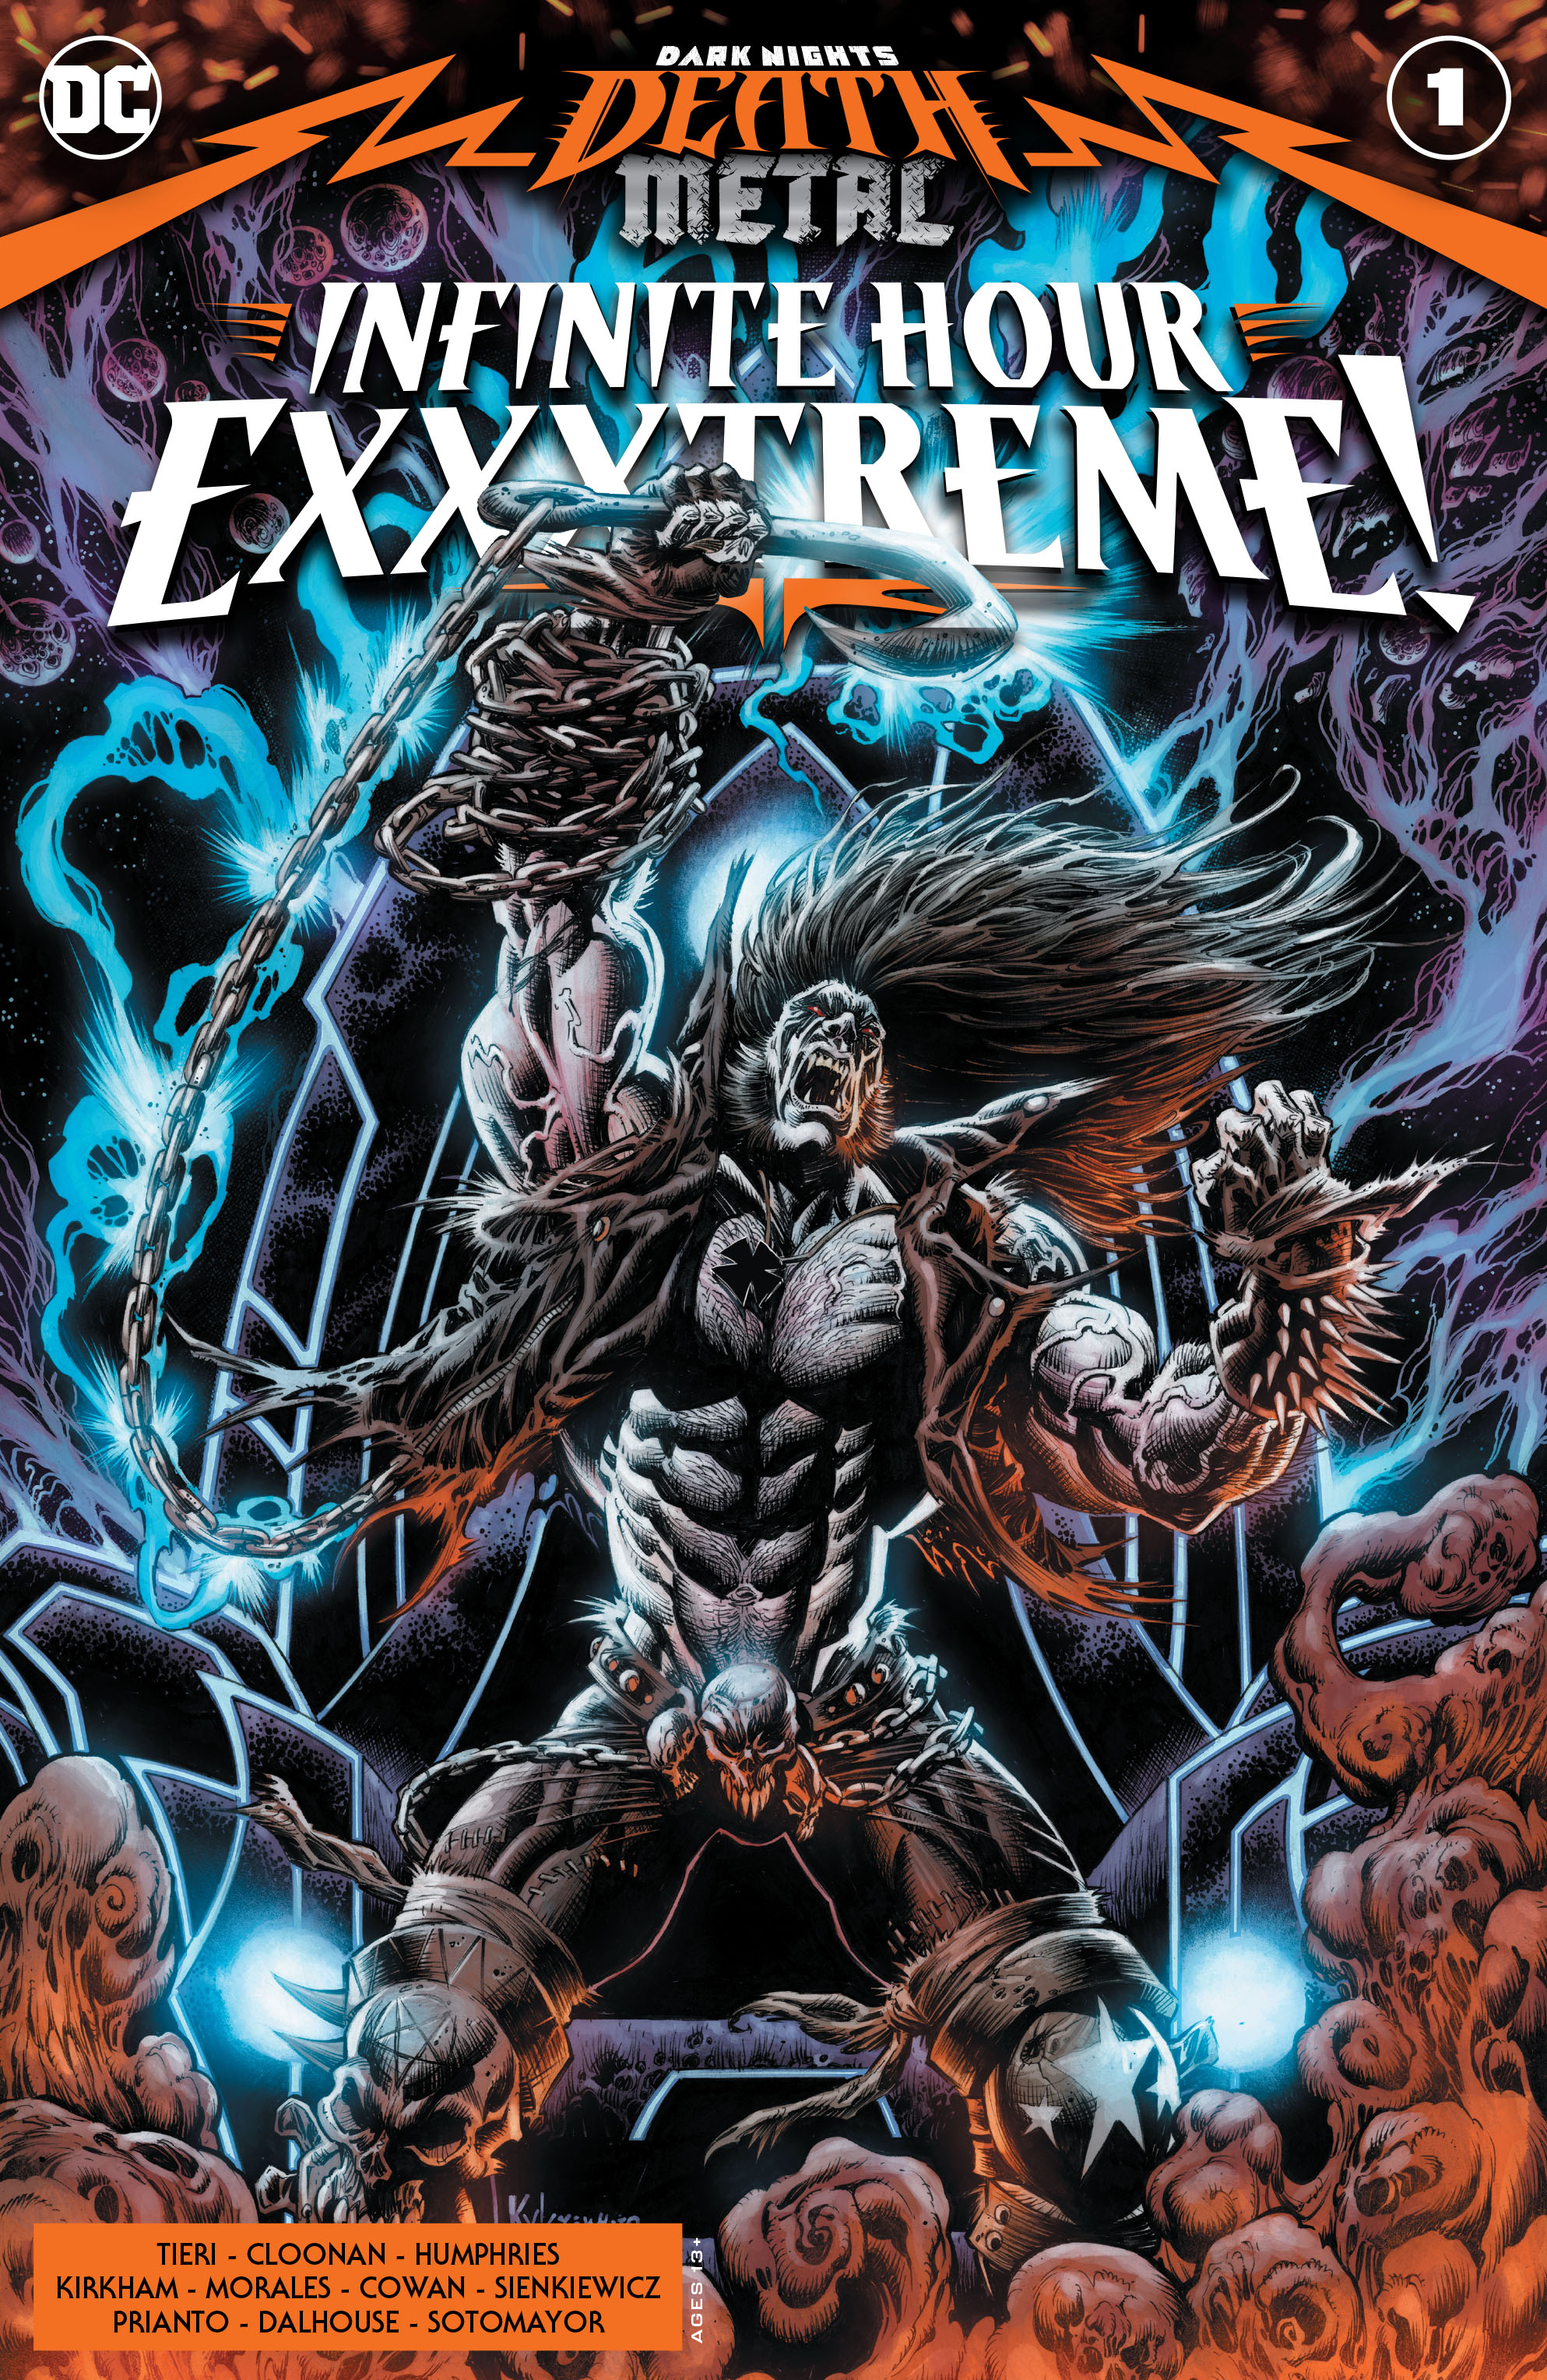 Read online Dark Nights: Death Metal Infinite Hour Exxxtreme! comic -  Issue # Full - 1